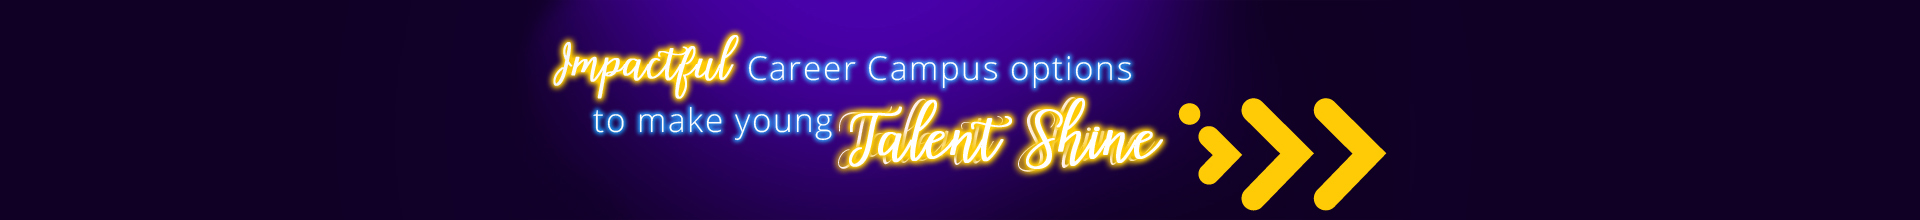 impactful-career-campus-options-v1